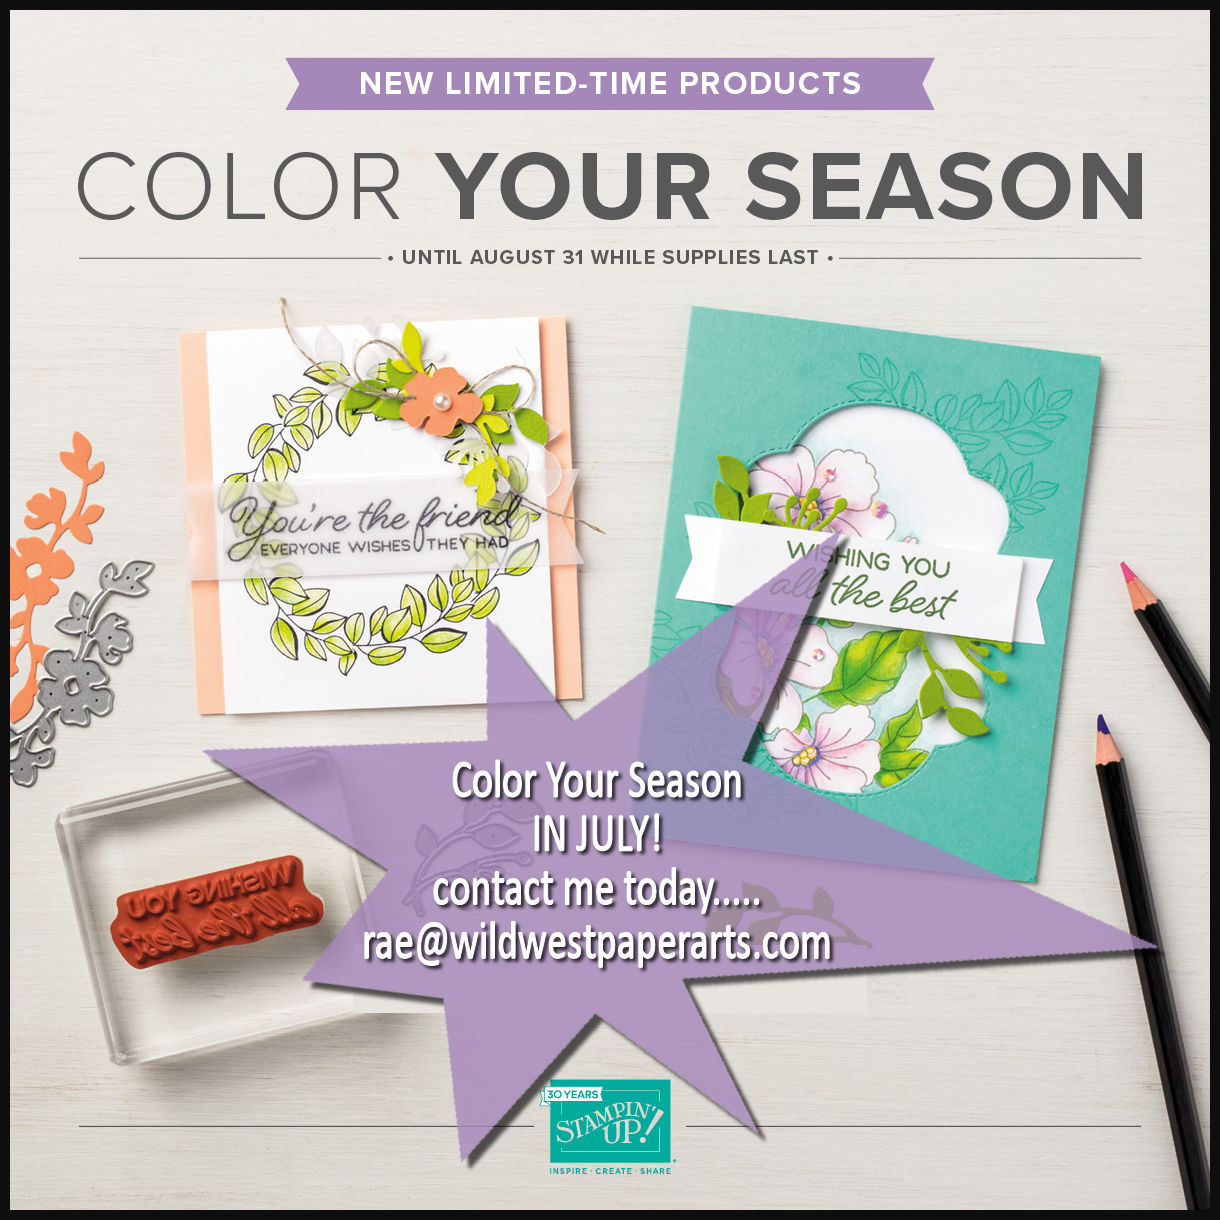 Color Your Season in July at WildWestPaperArts.com